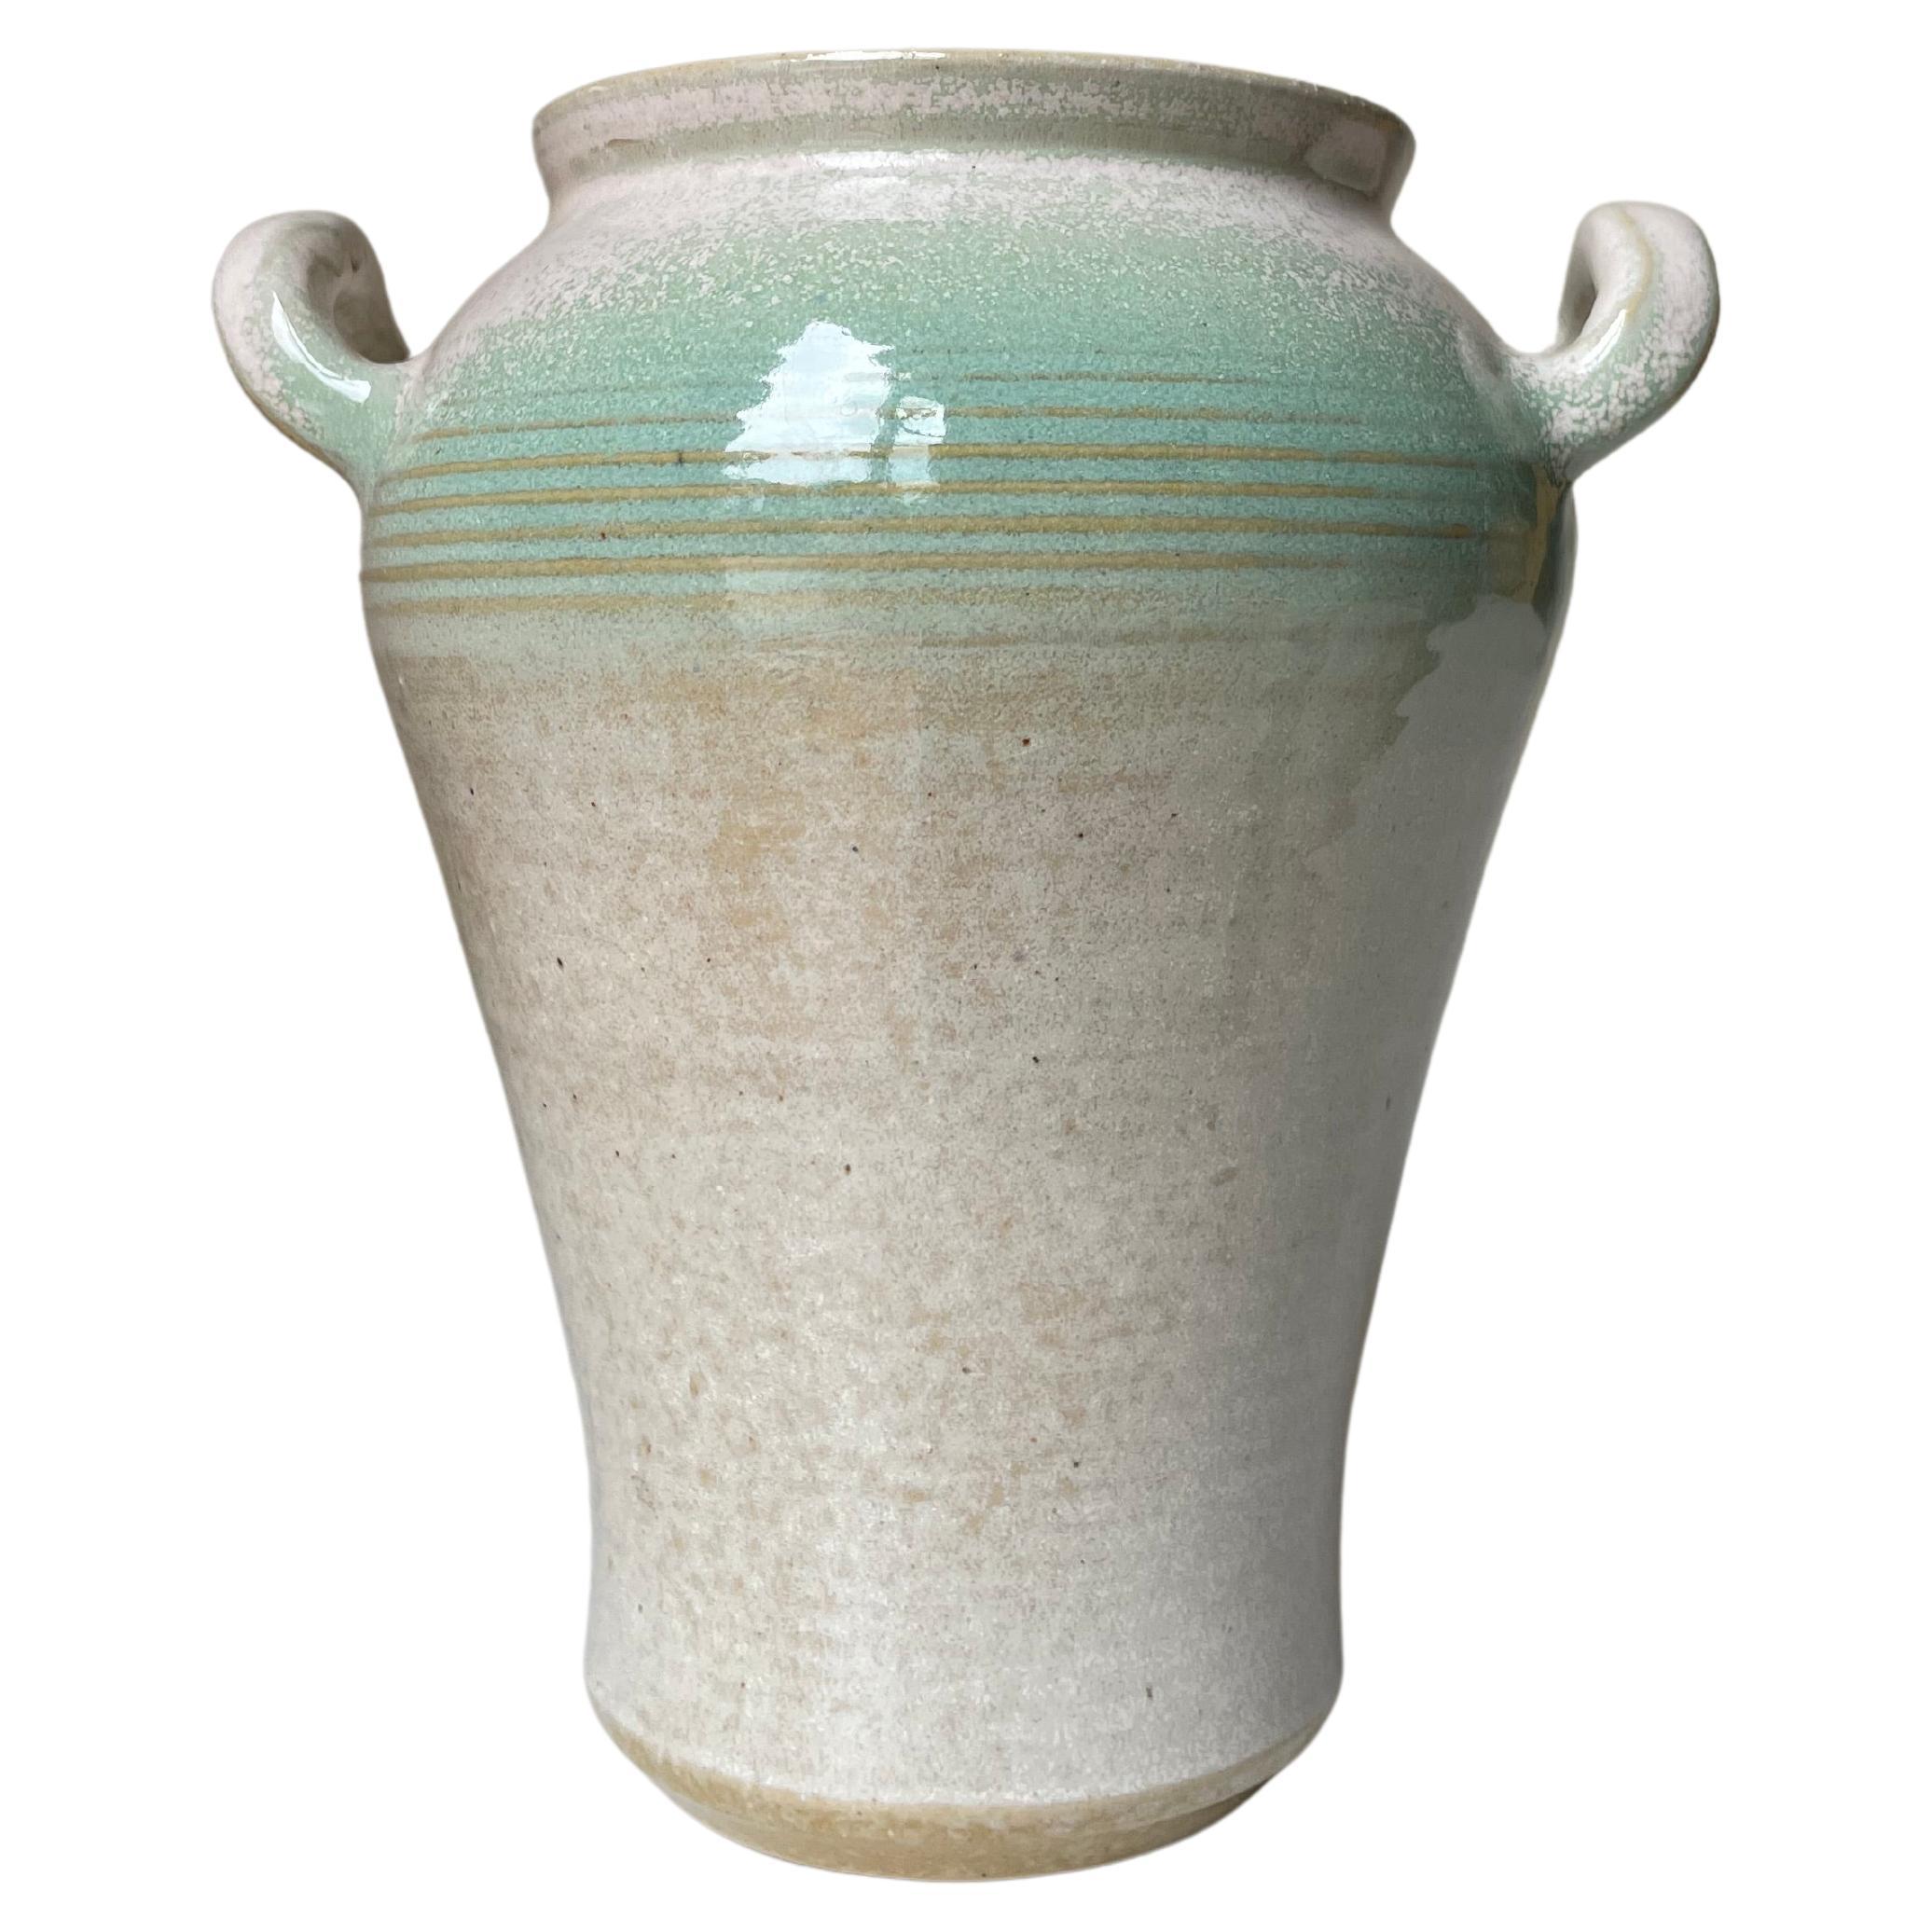 Skottorp White and Pastel Green Glazed Stoneware Handle Vase, 1970s